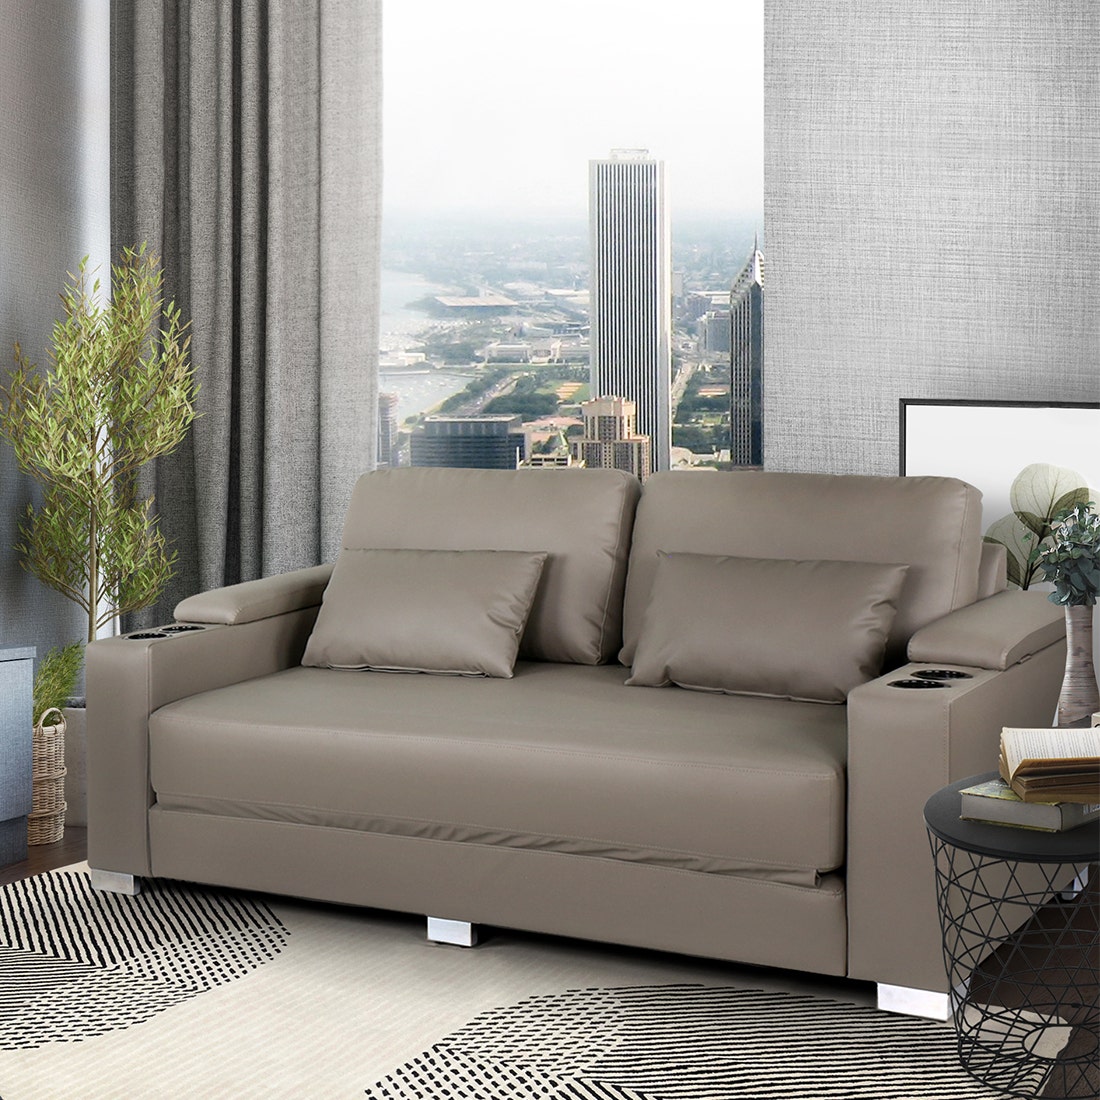 Tuxido grey leather sofa bed Gray